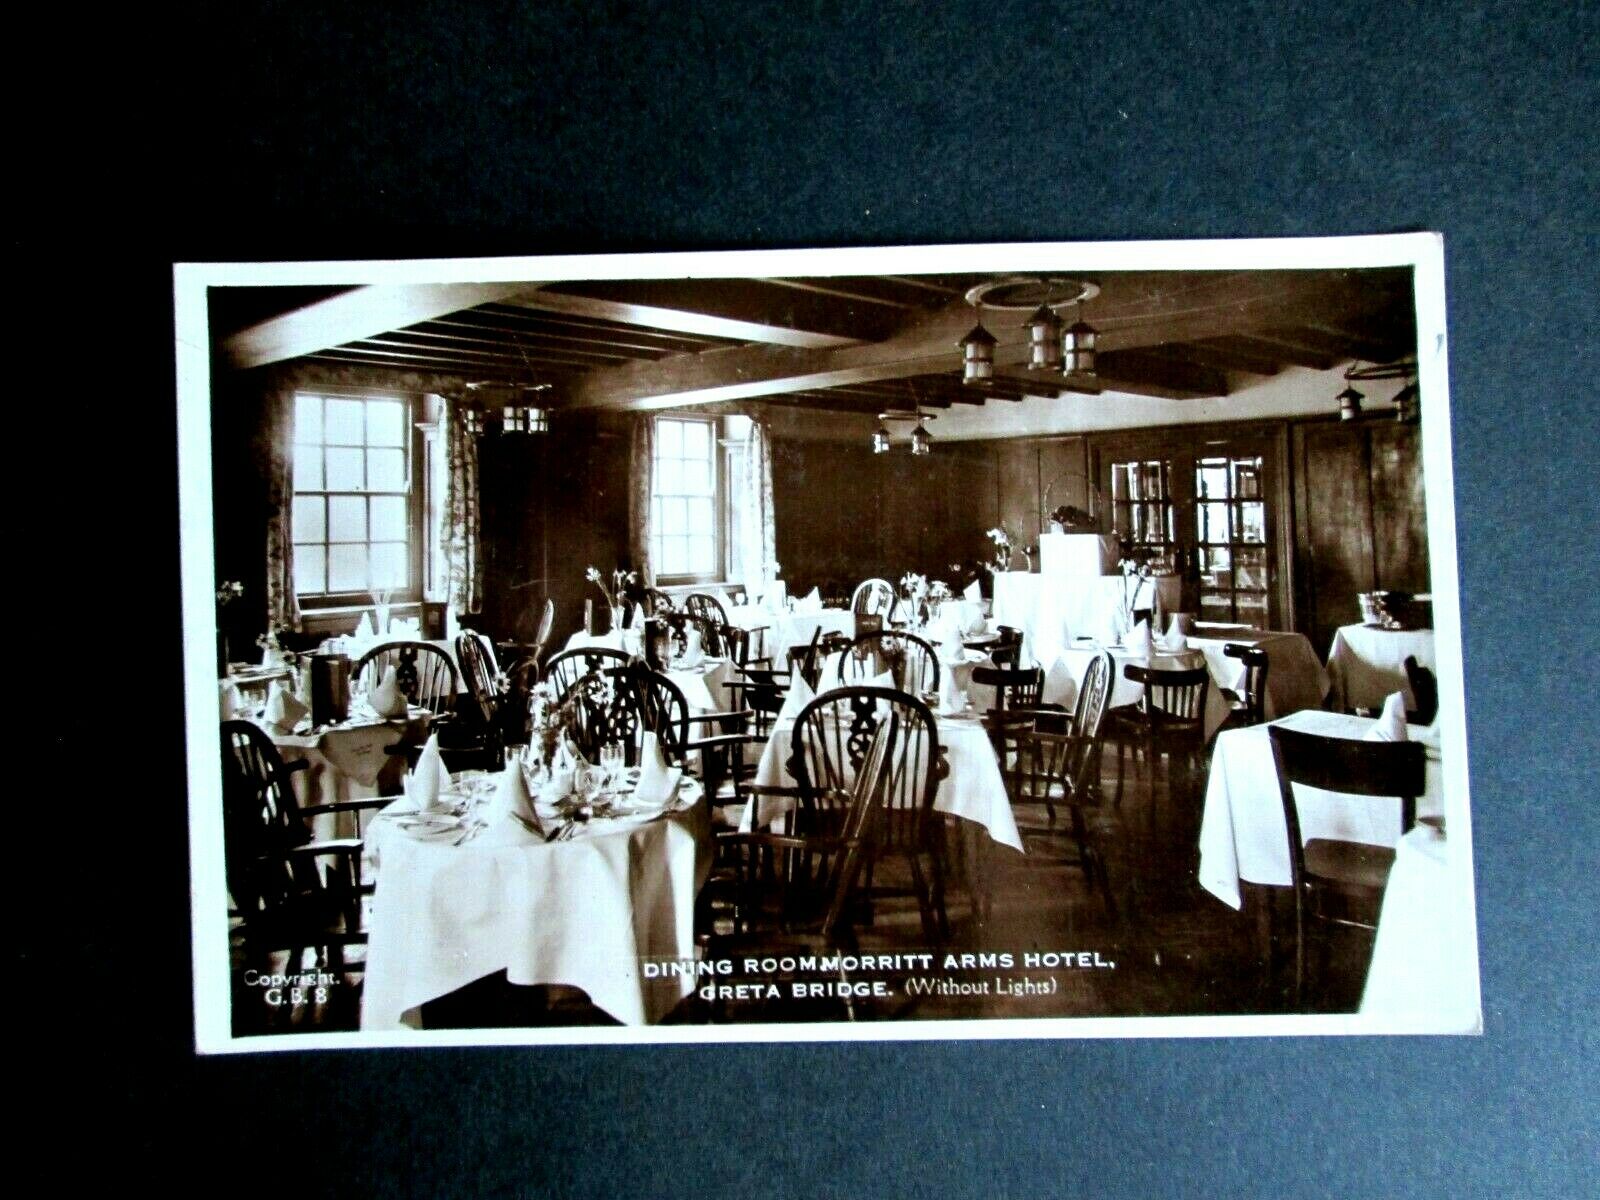 House Clearance - THE MORRITT ARMS HOTEL, GRETA BRIDGE, COUNTY DURHAM - A REAL PHOTOGRAPHIC CARD